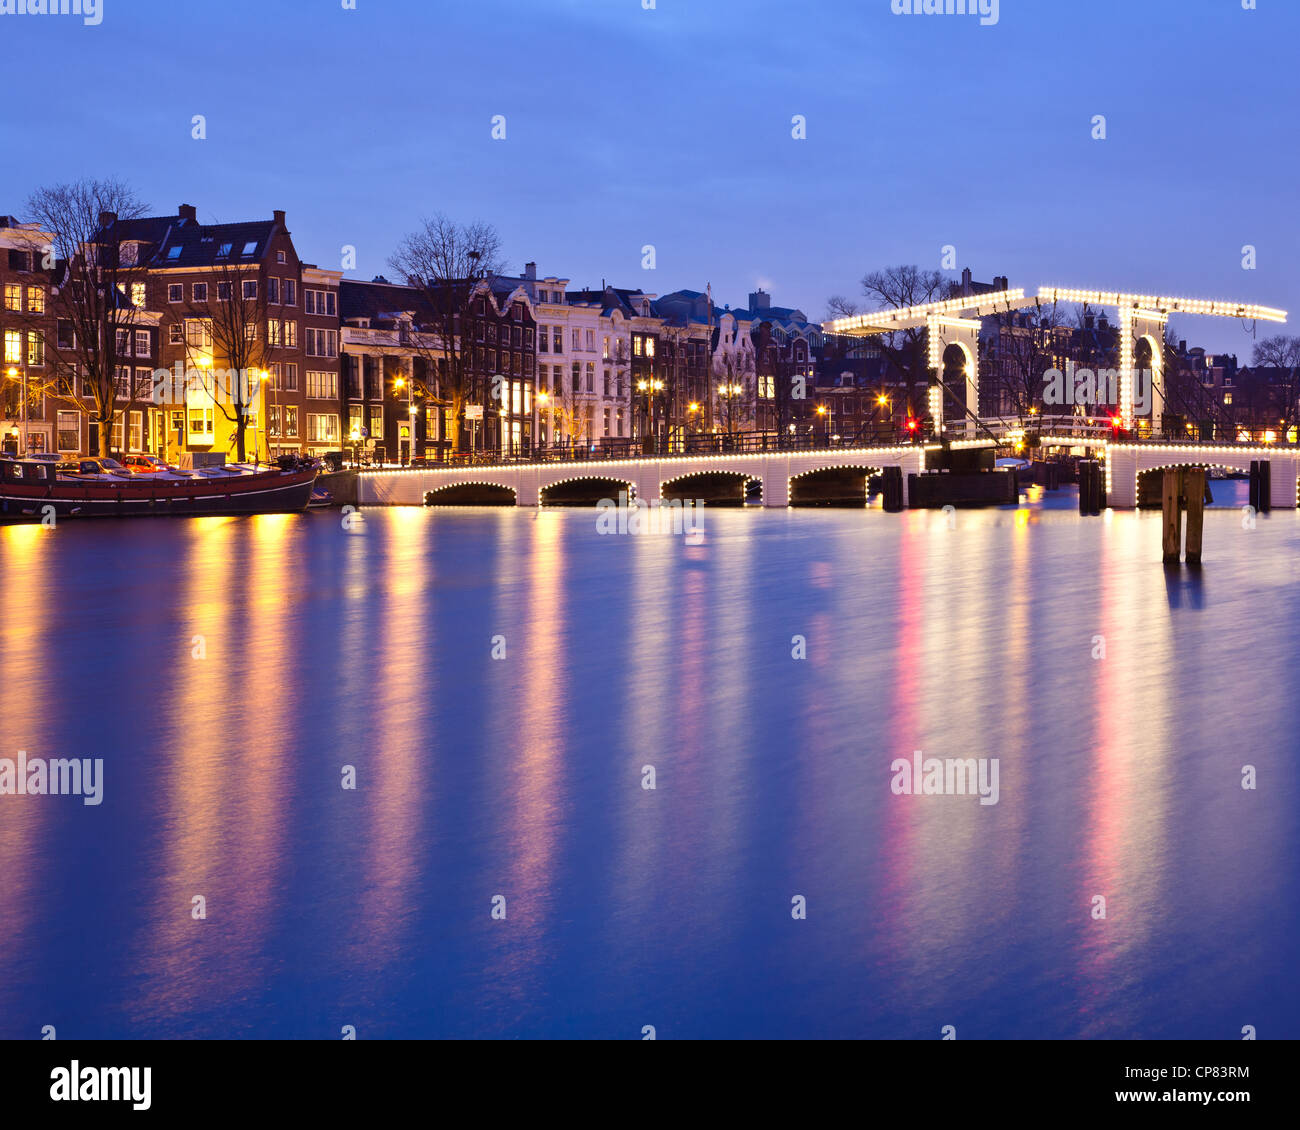 Magere Brug or Skinny Bridge in Amsterdam Stock Photo